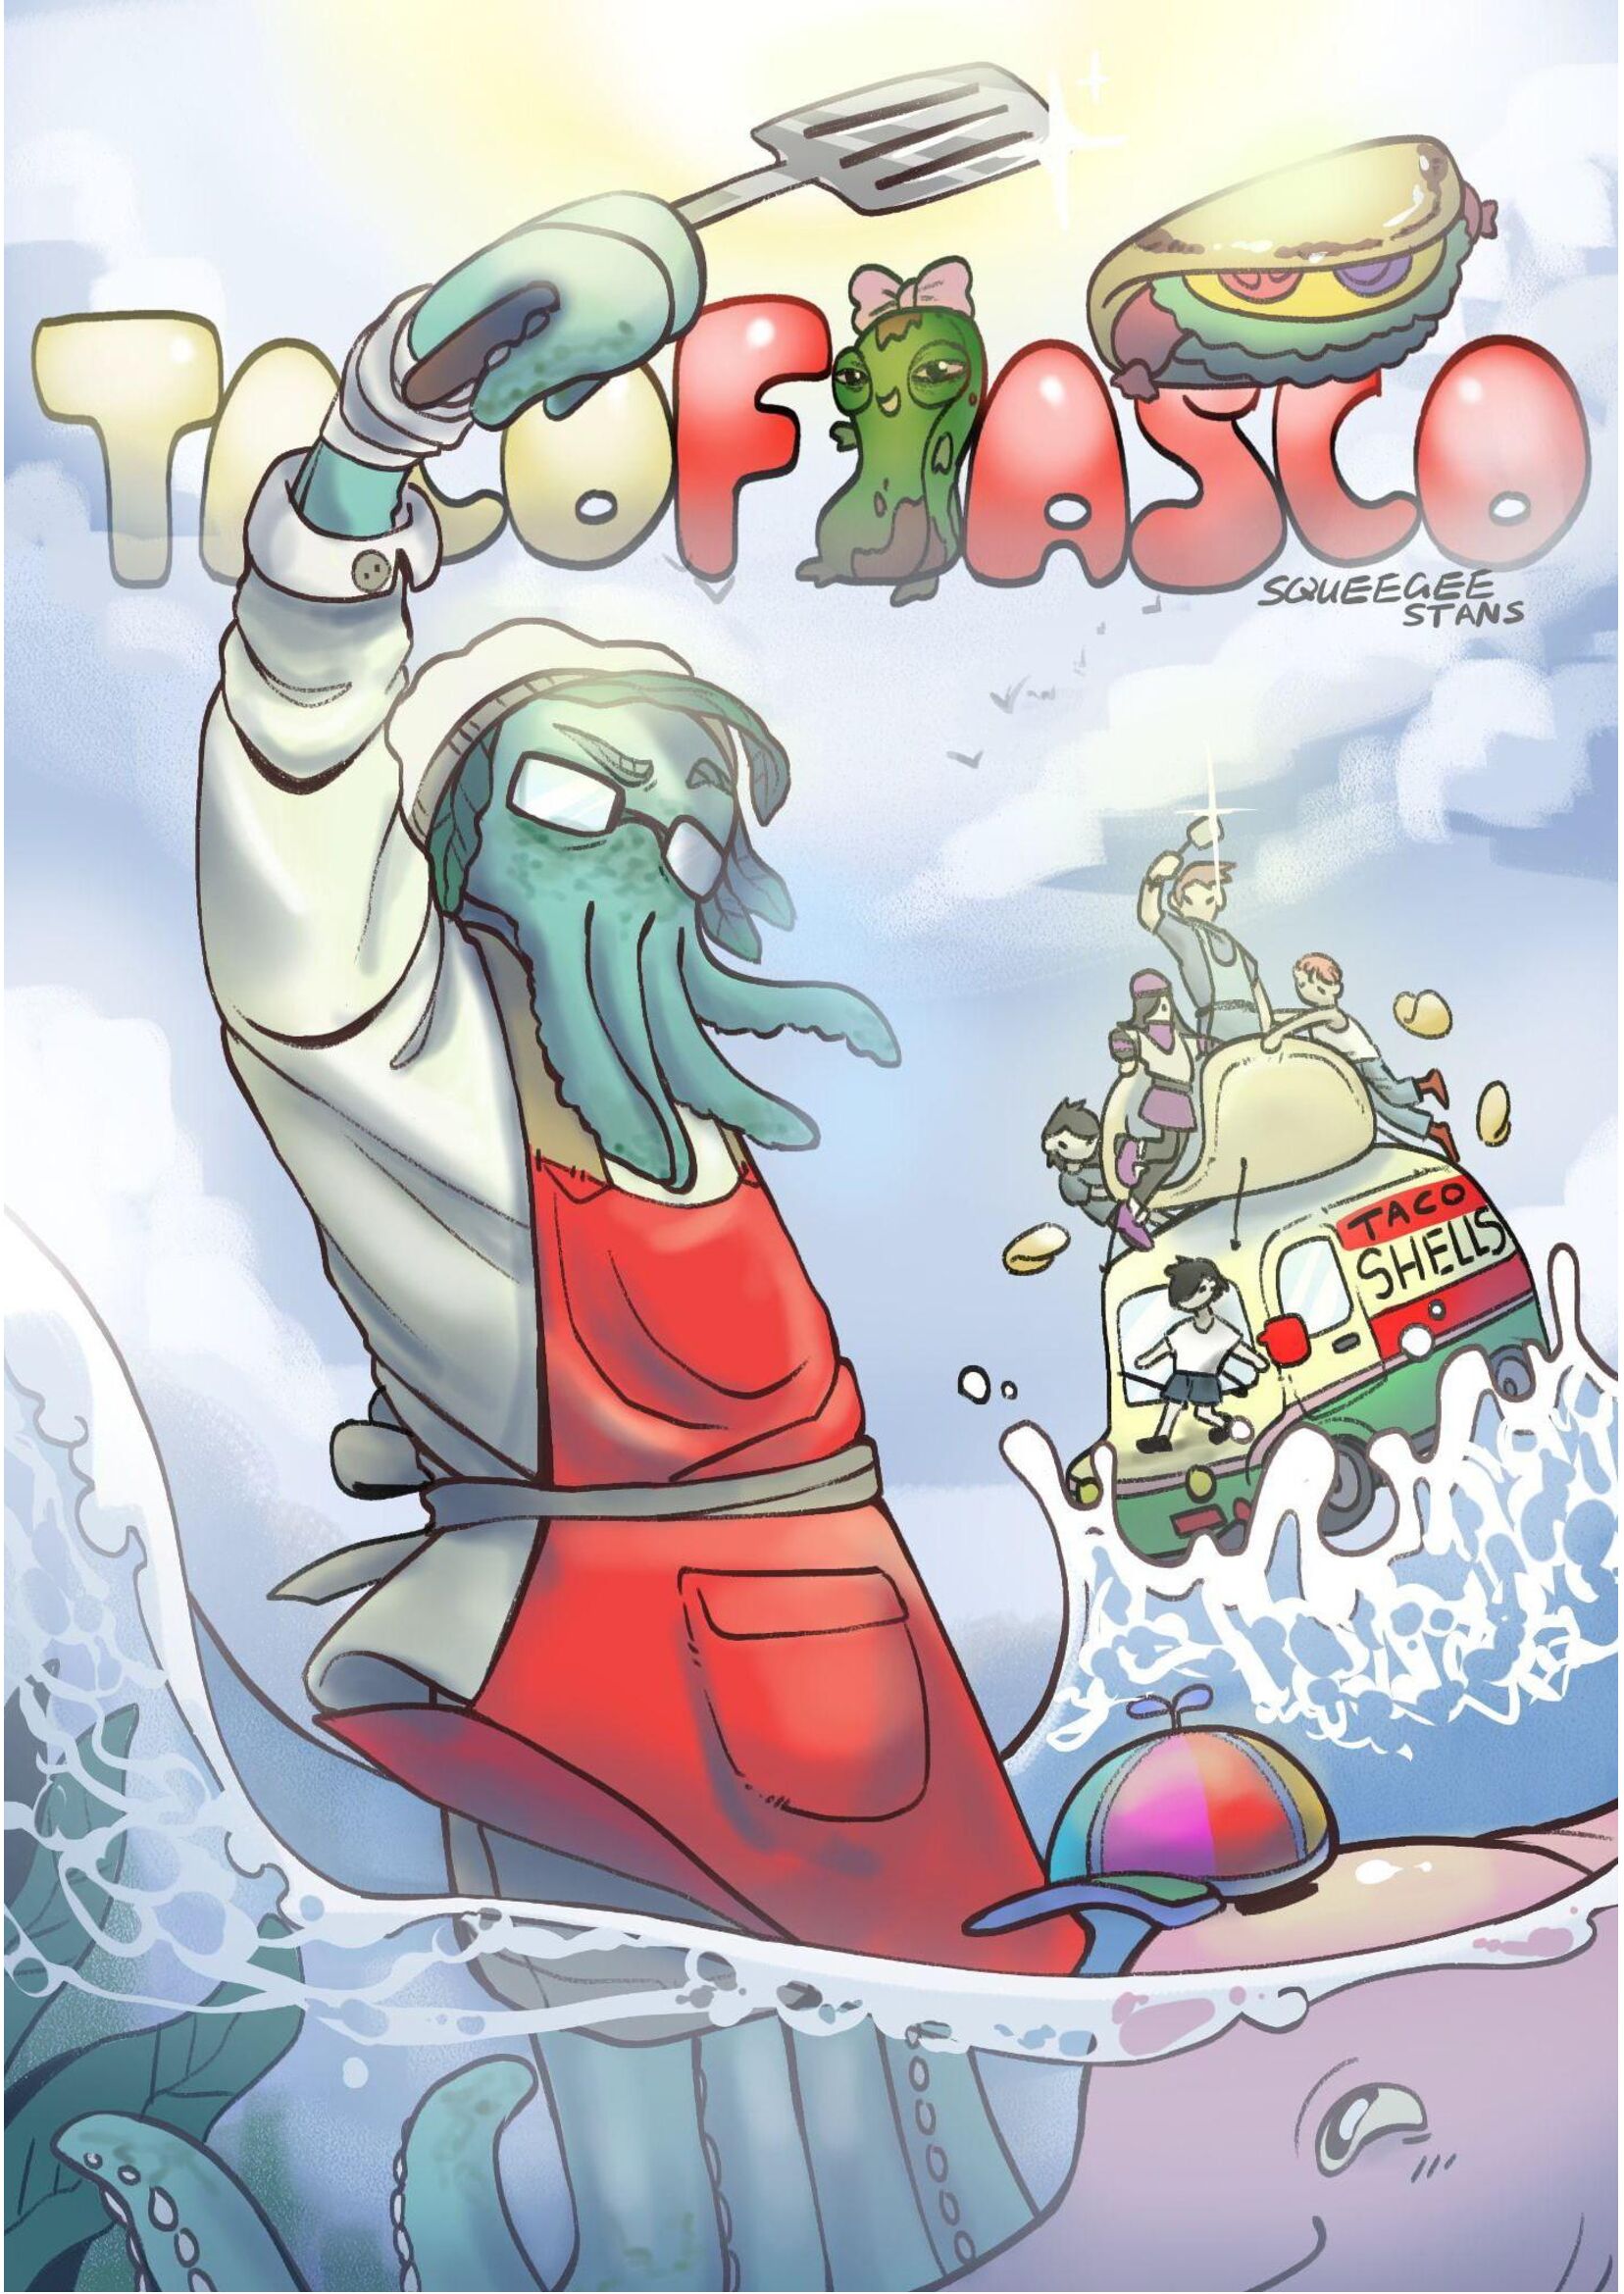 Taco Fiasco - Squeegee Stans